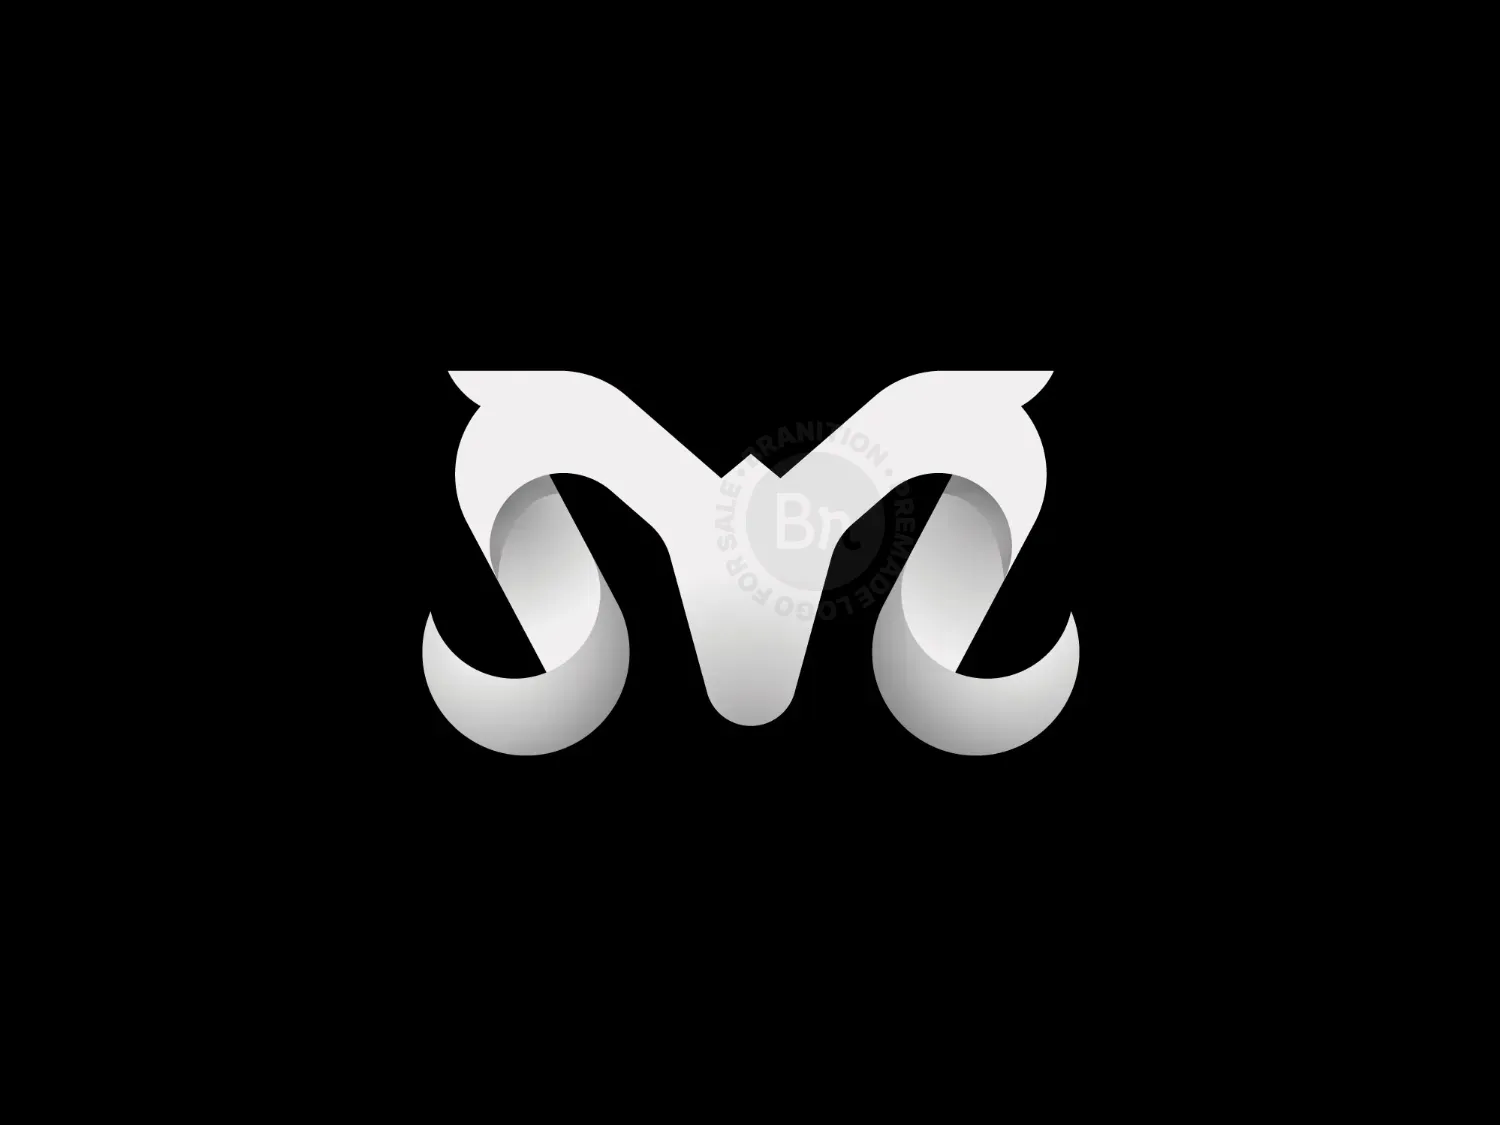 Gothic M Letter Logos